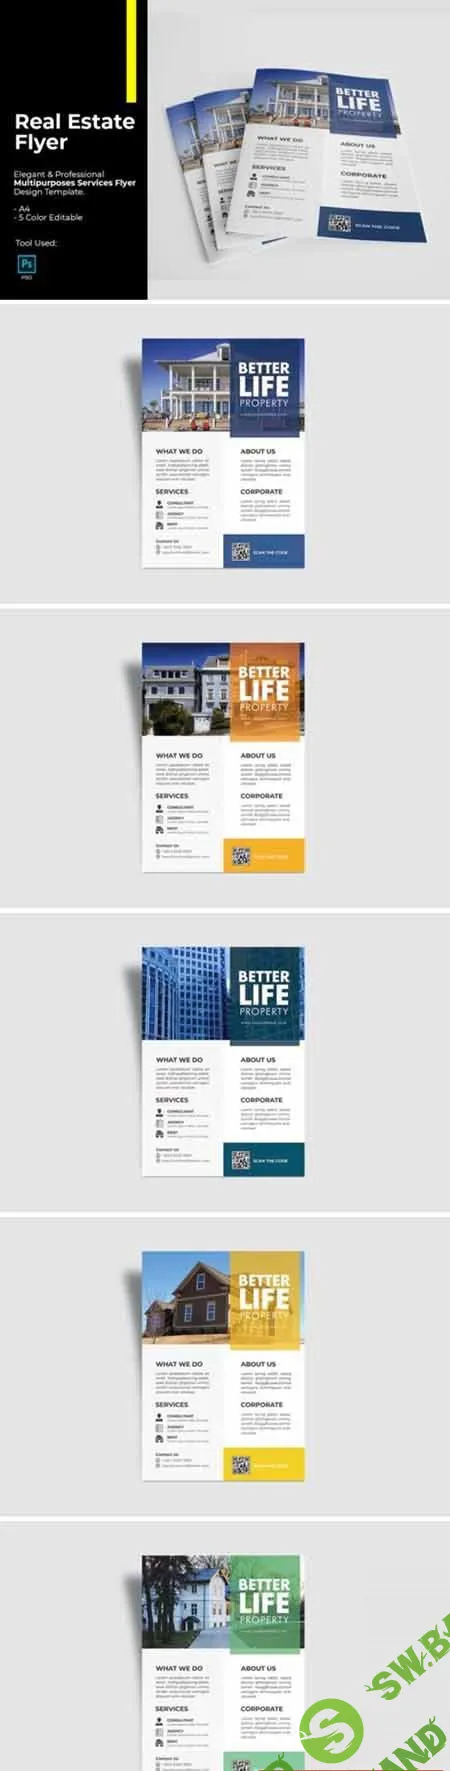 [Creativemarket] Real Estate Flyer Design